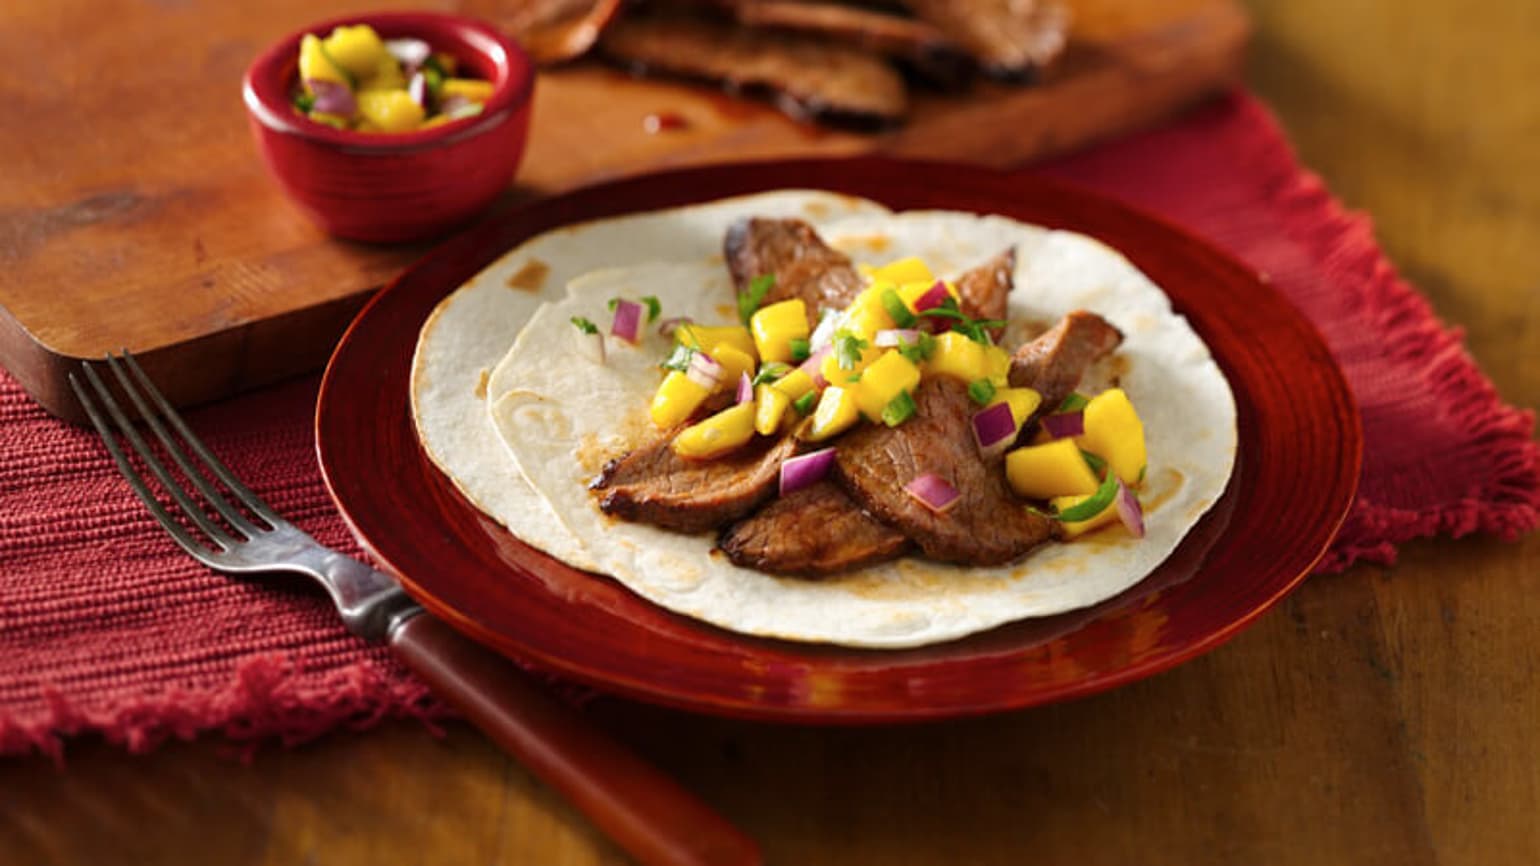 Flank Steak Tacos with Mango Salsa